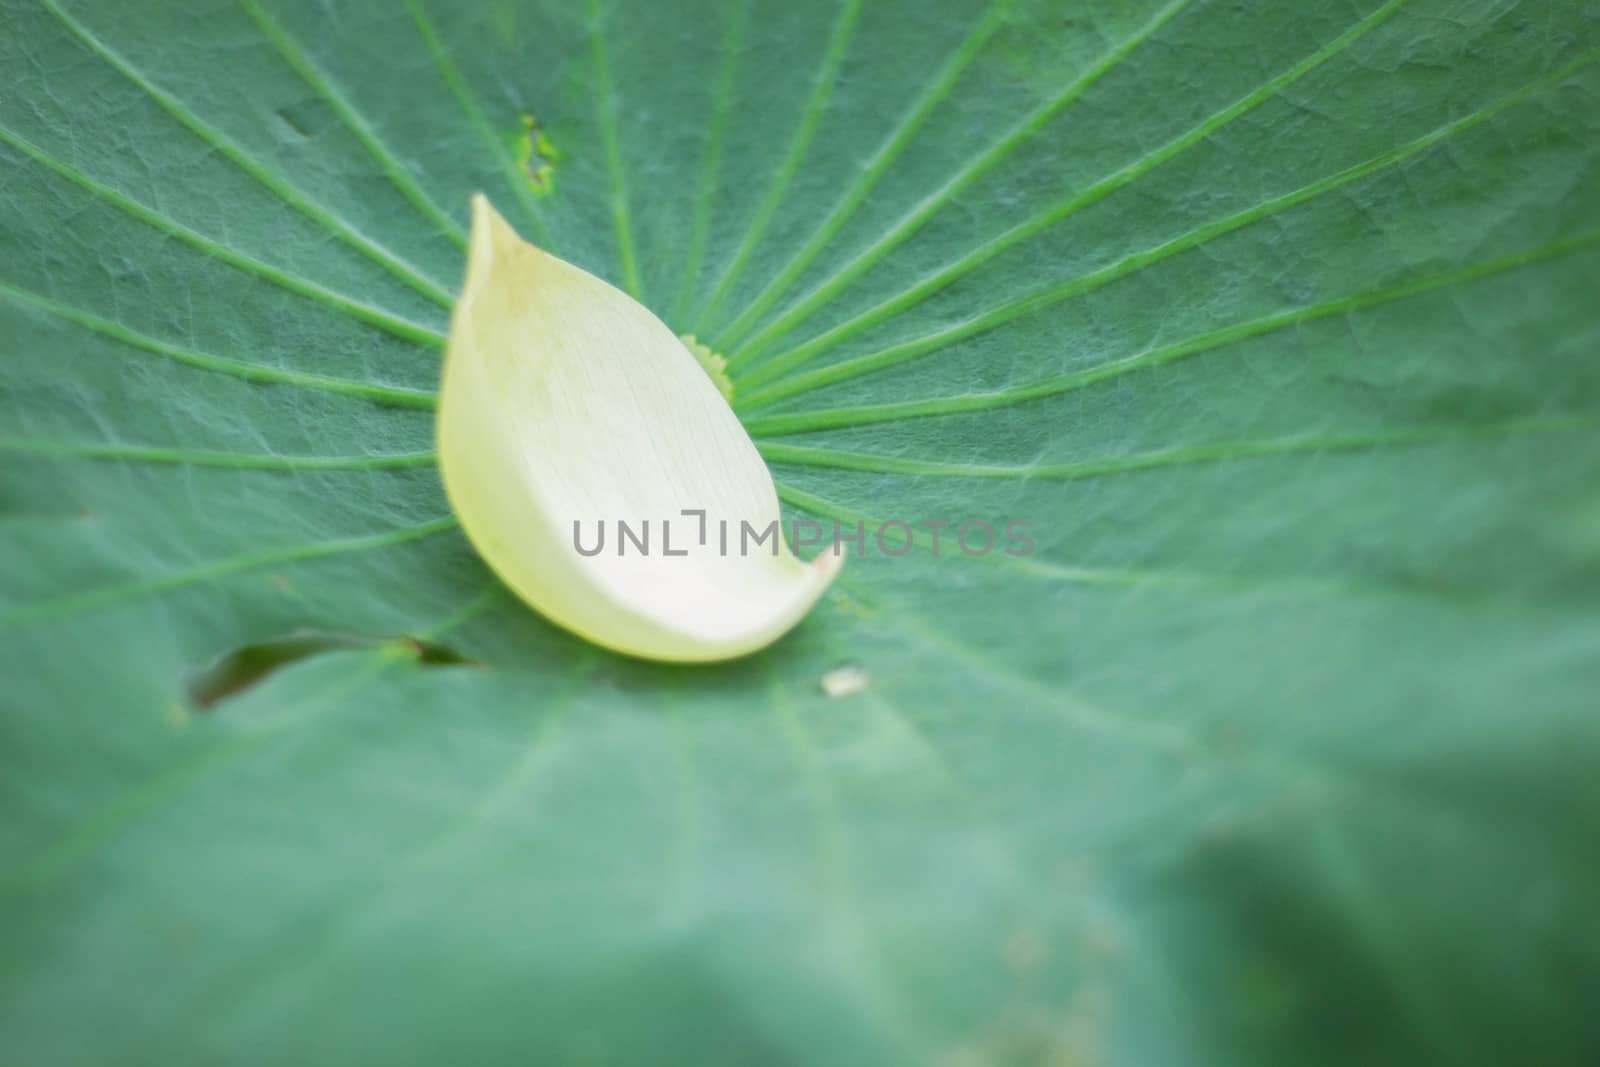 Lotus flower petals on leaf with background details.